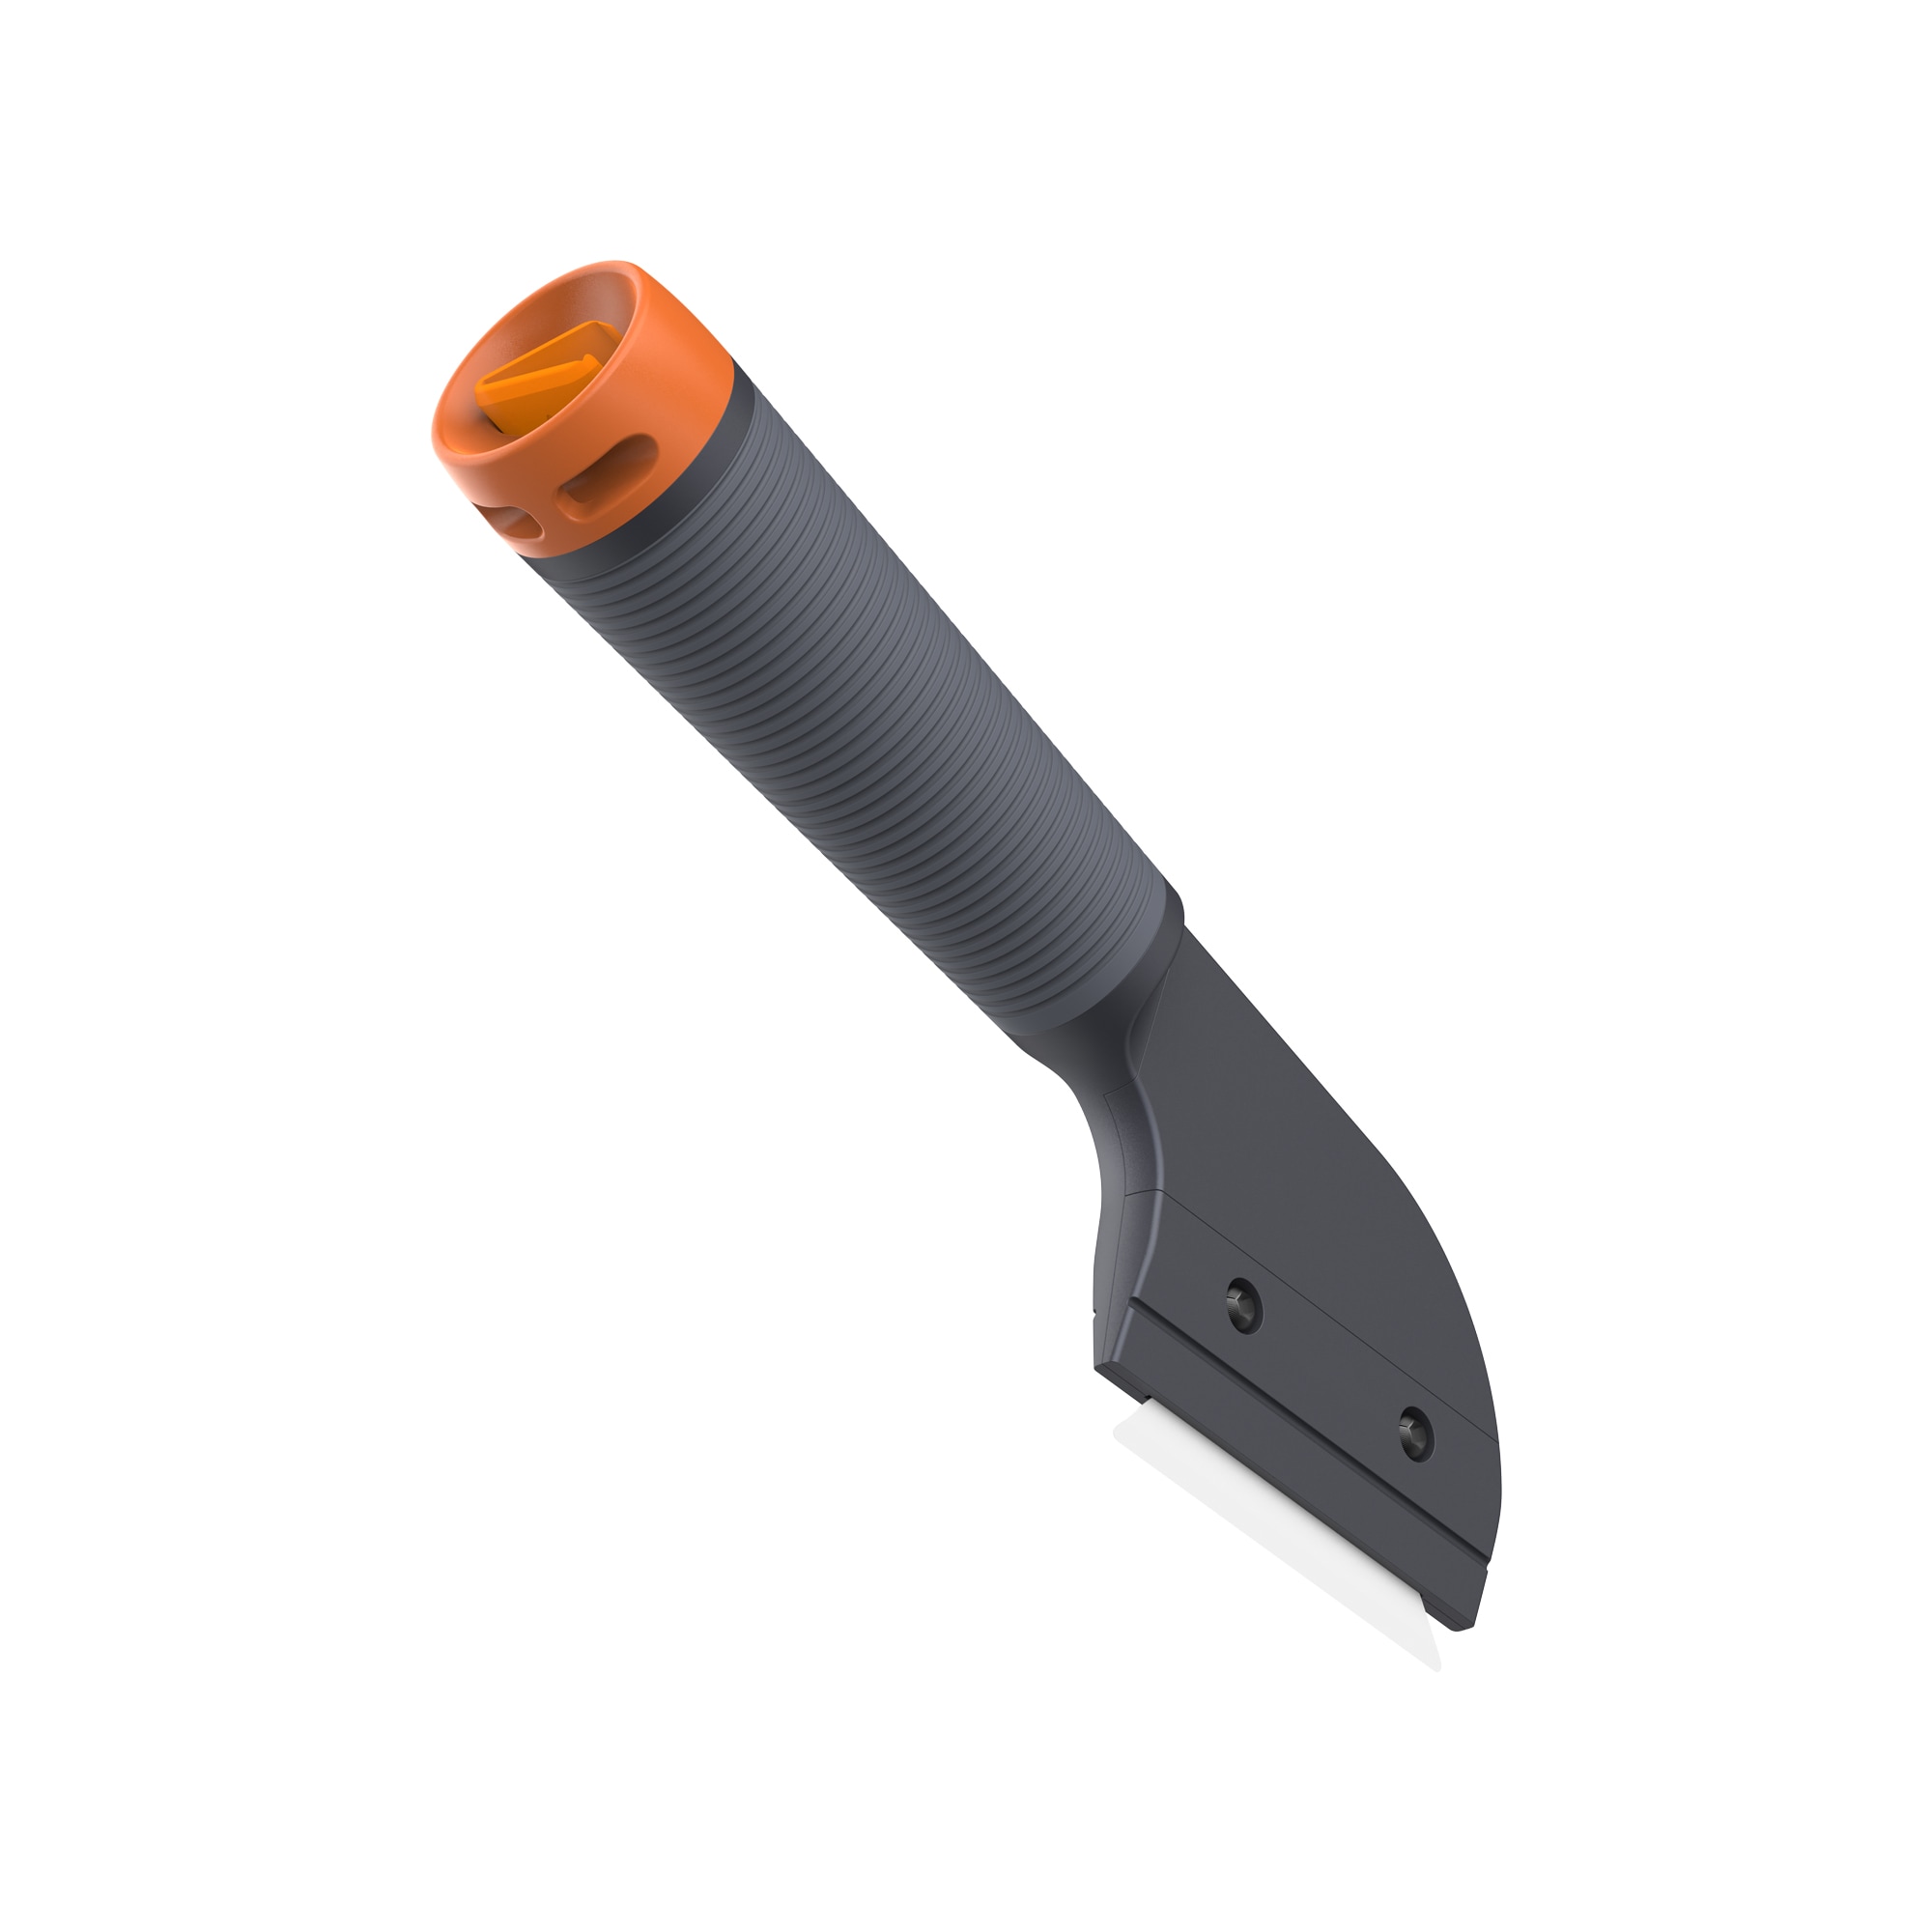 Slice Mini Cleaver 1-Blade Utility Knife in the Utility Knives